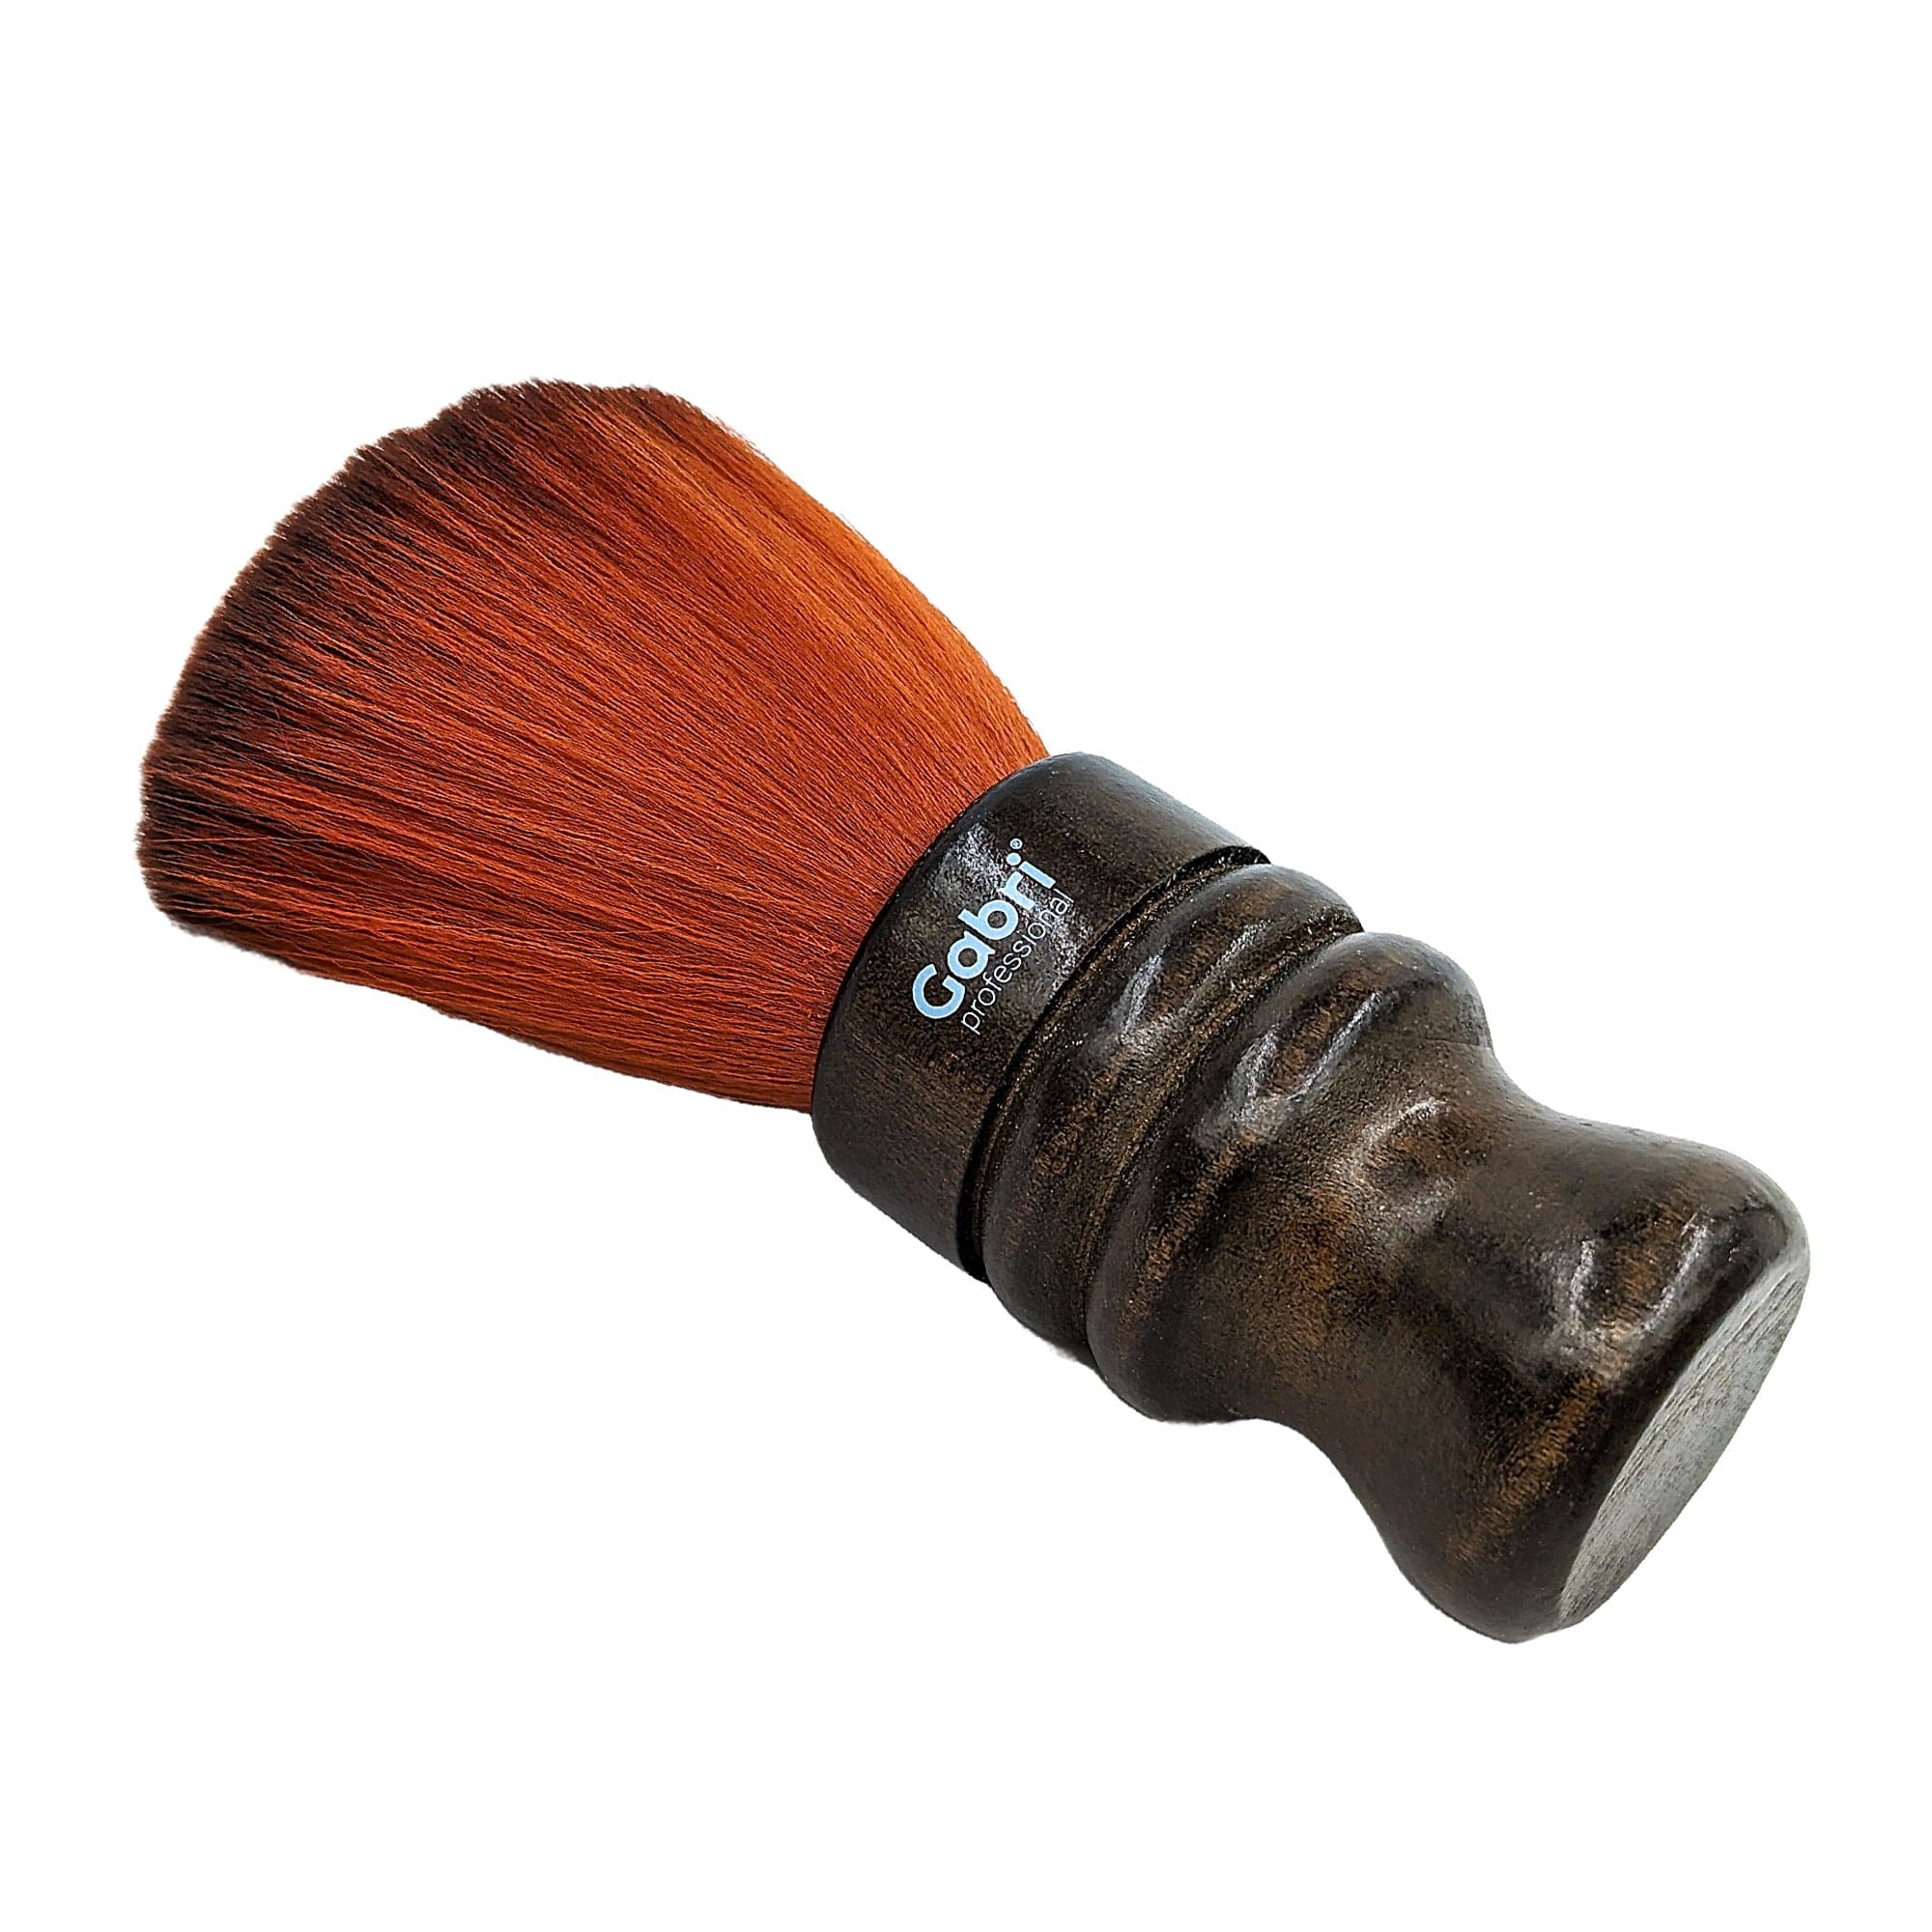 Gabri - Barber Neck Brush Red Bristles Dark Wood Handle 14.5cm